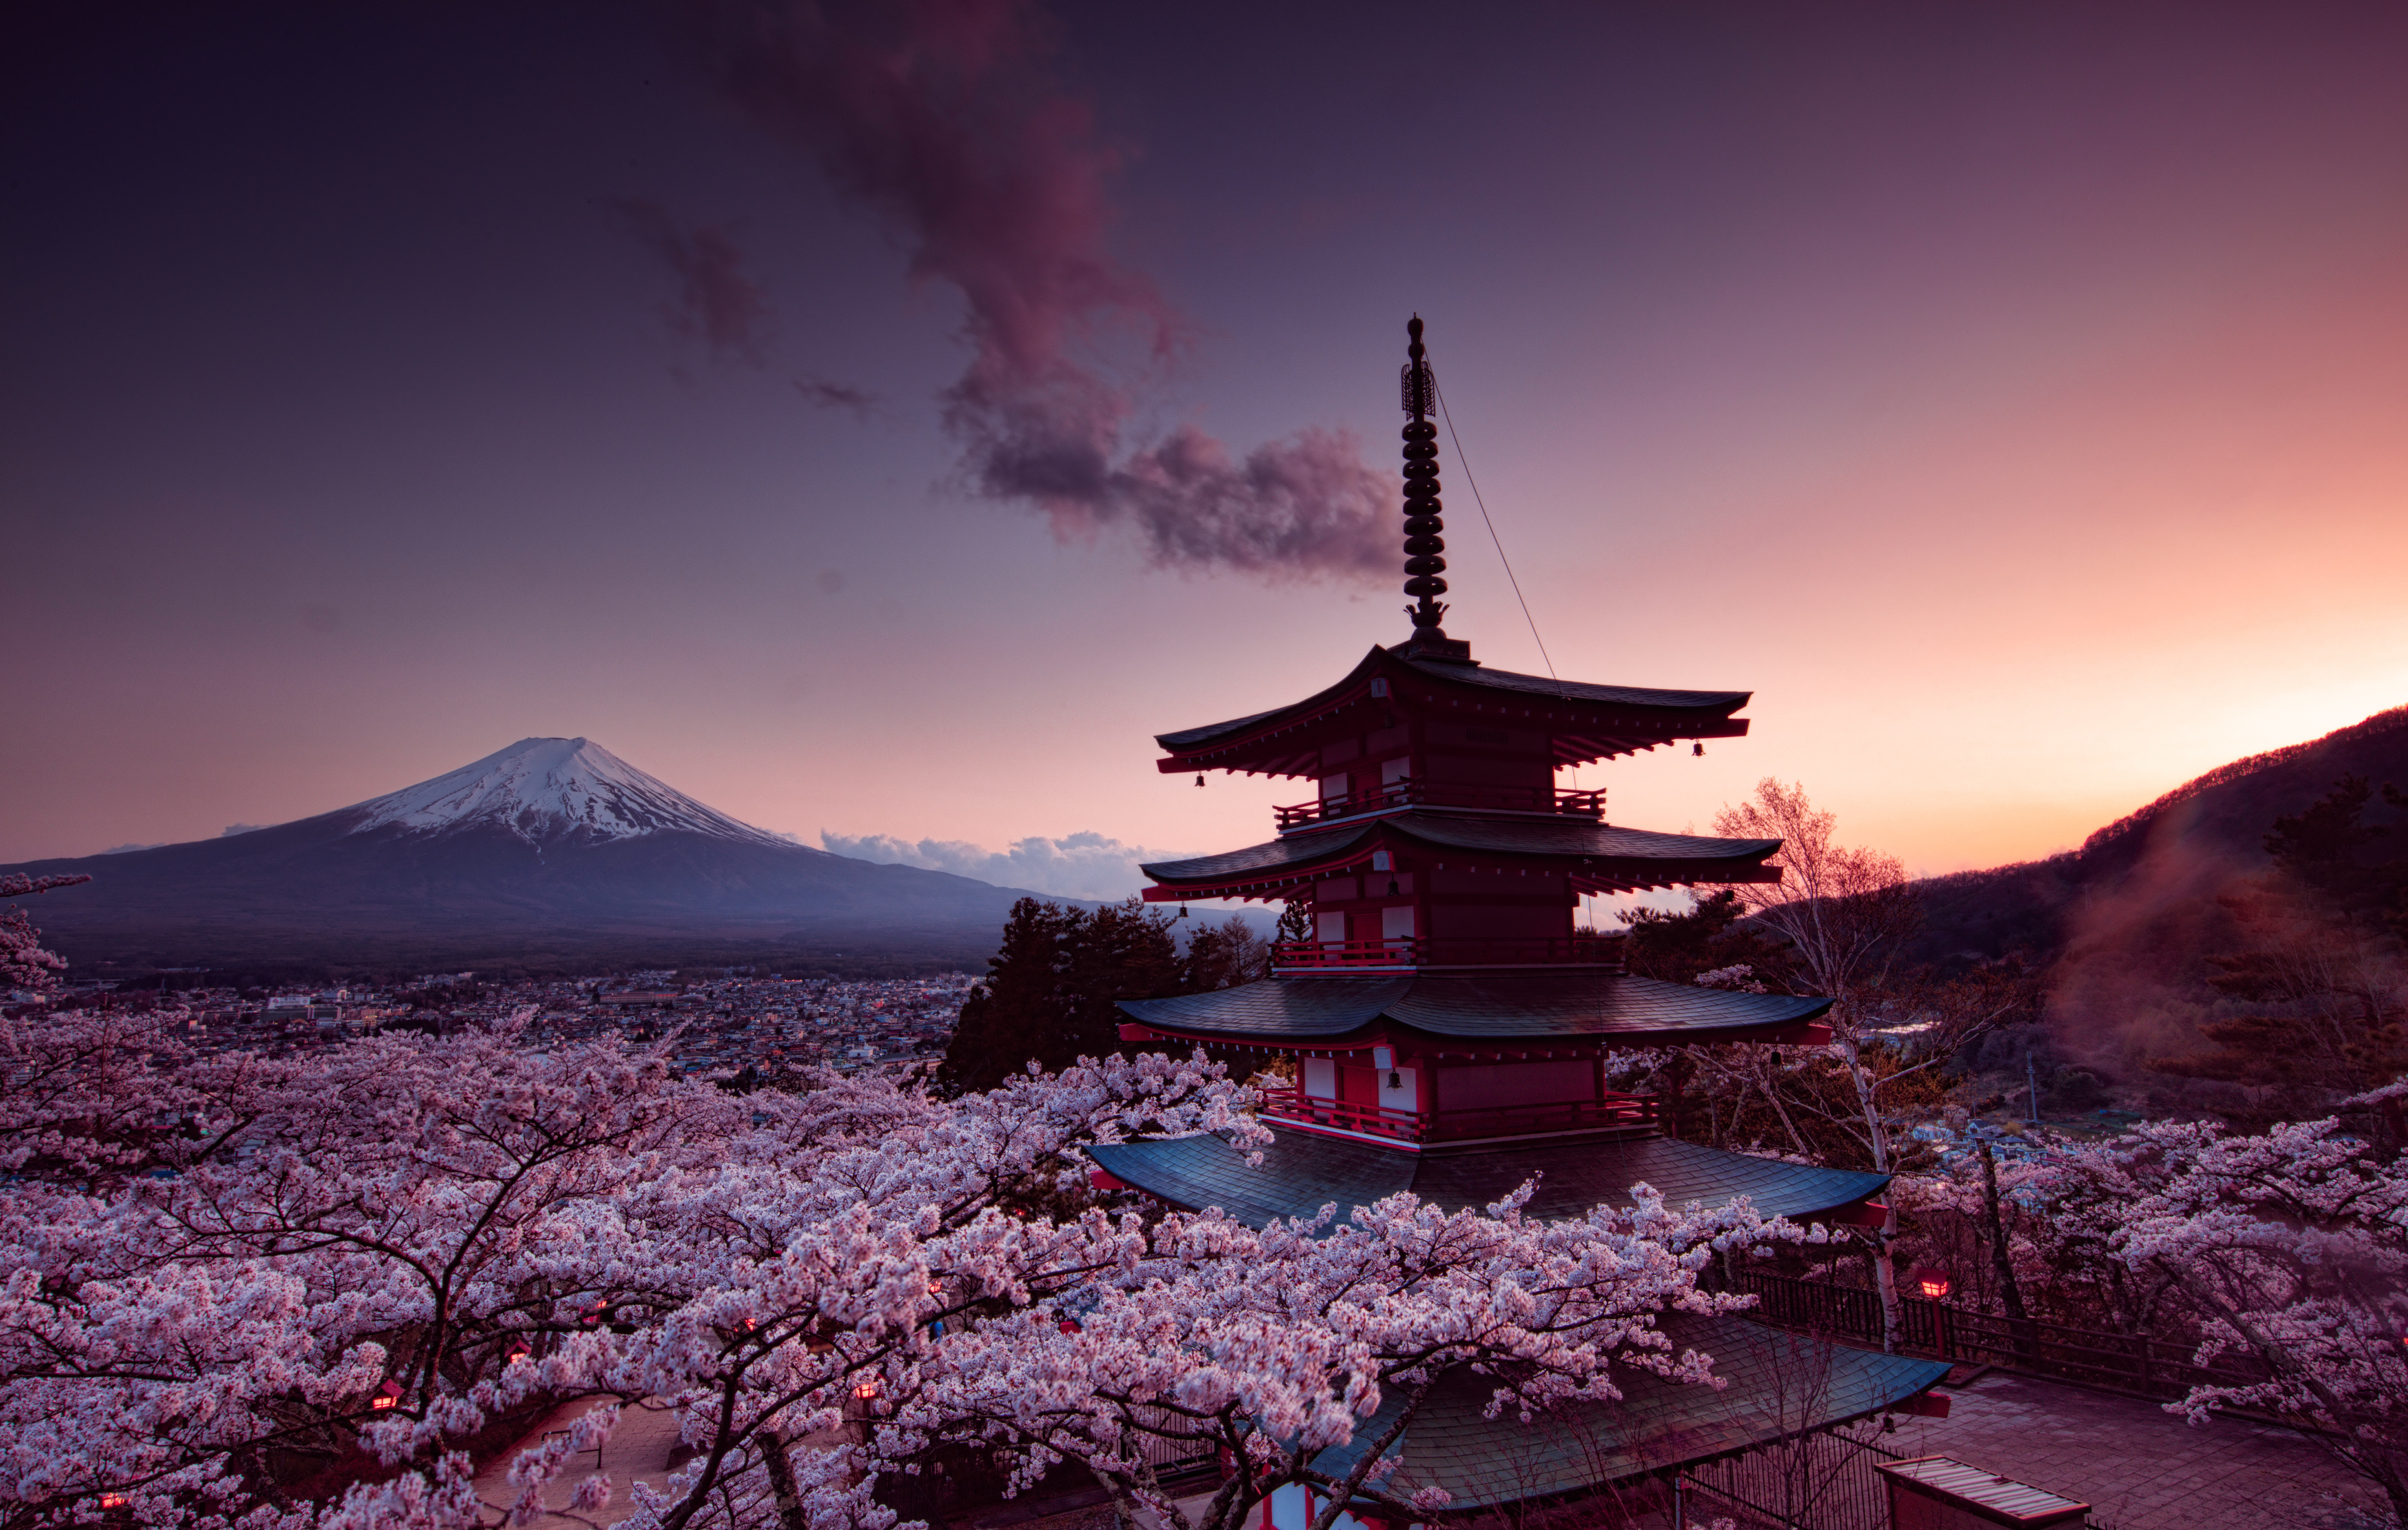 Churei Tower Mount Fuji In Japan 8k, HD Nature, 4k Wallpapers, Images